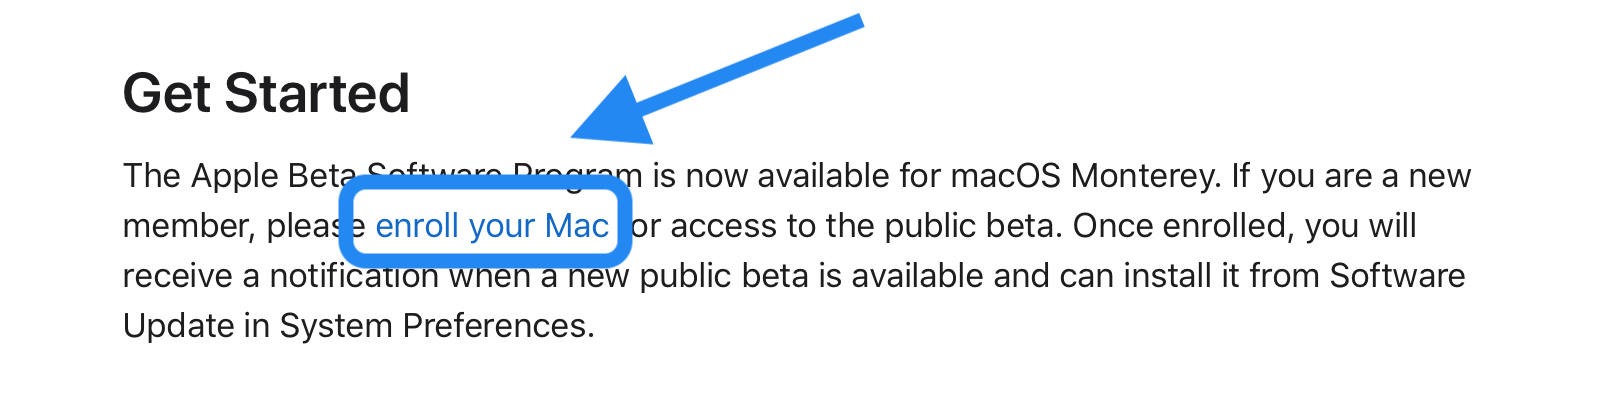 Install macOS Monterey public beta - walkthrough 3